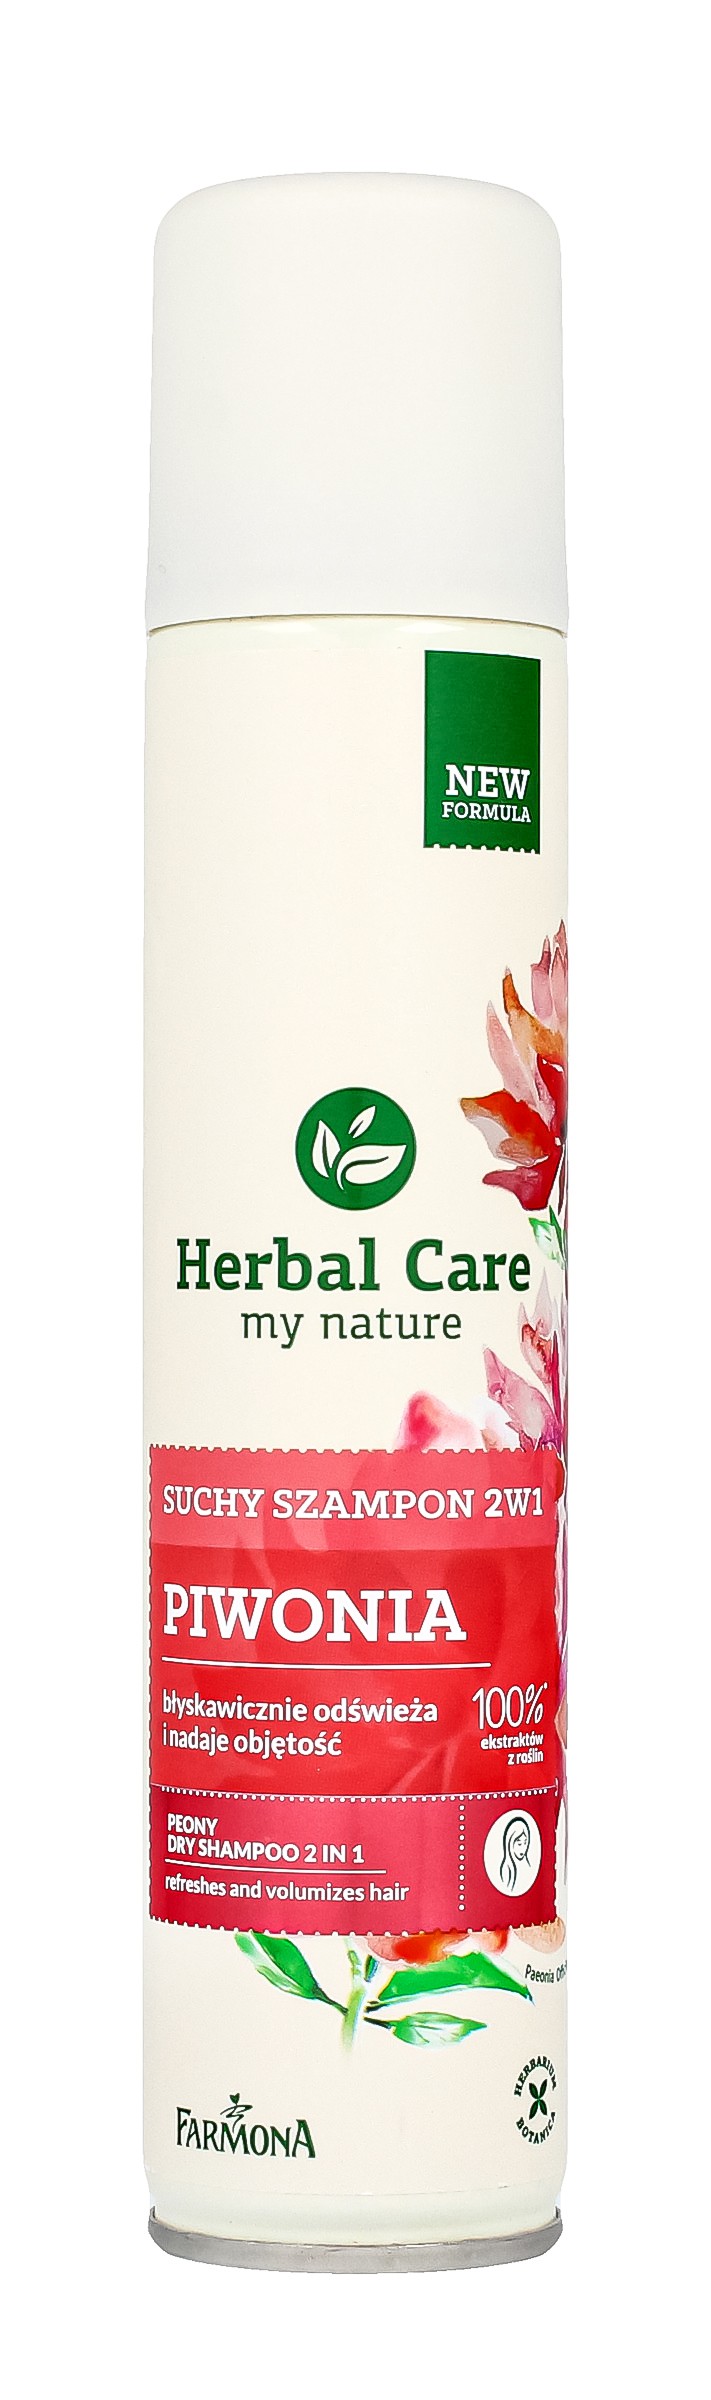 farmona herbal care suchy szampon piwonia